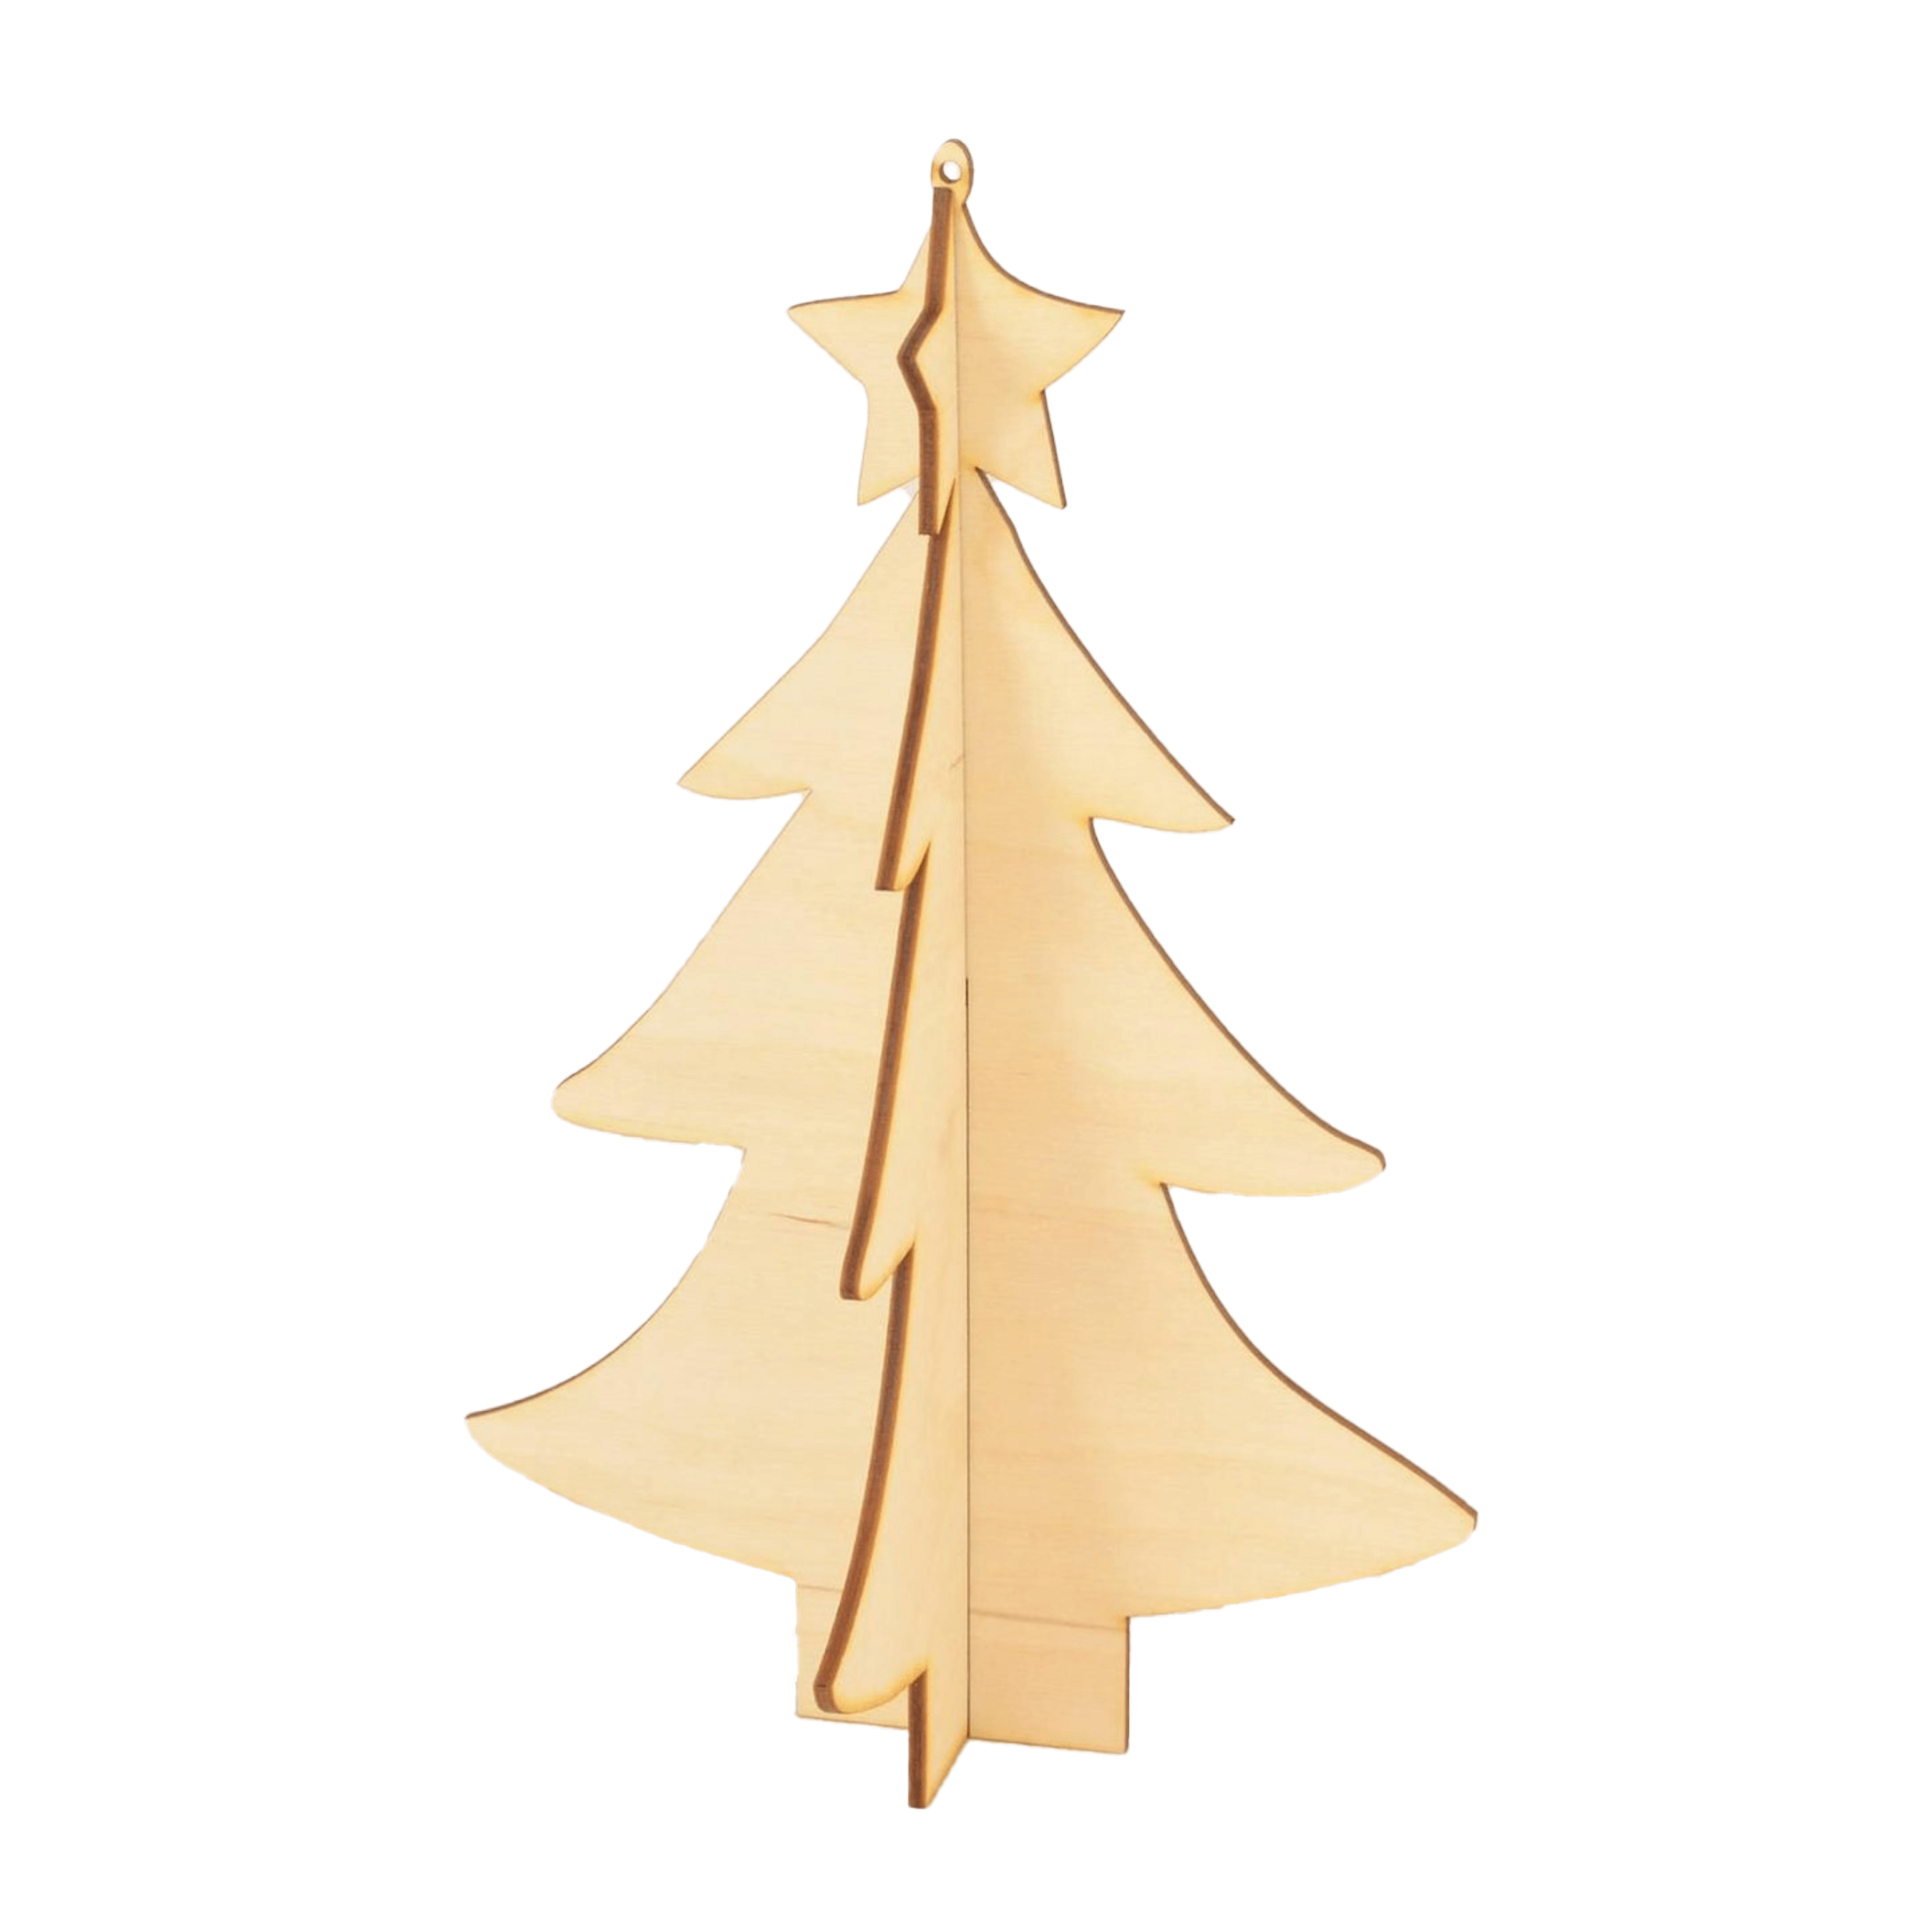 25 SMALL Snowflake Wood Christmas Ornament Supplies DIY Wooden